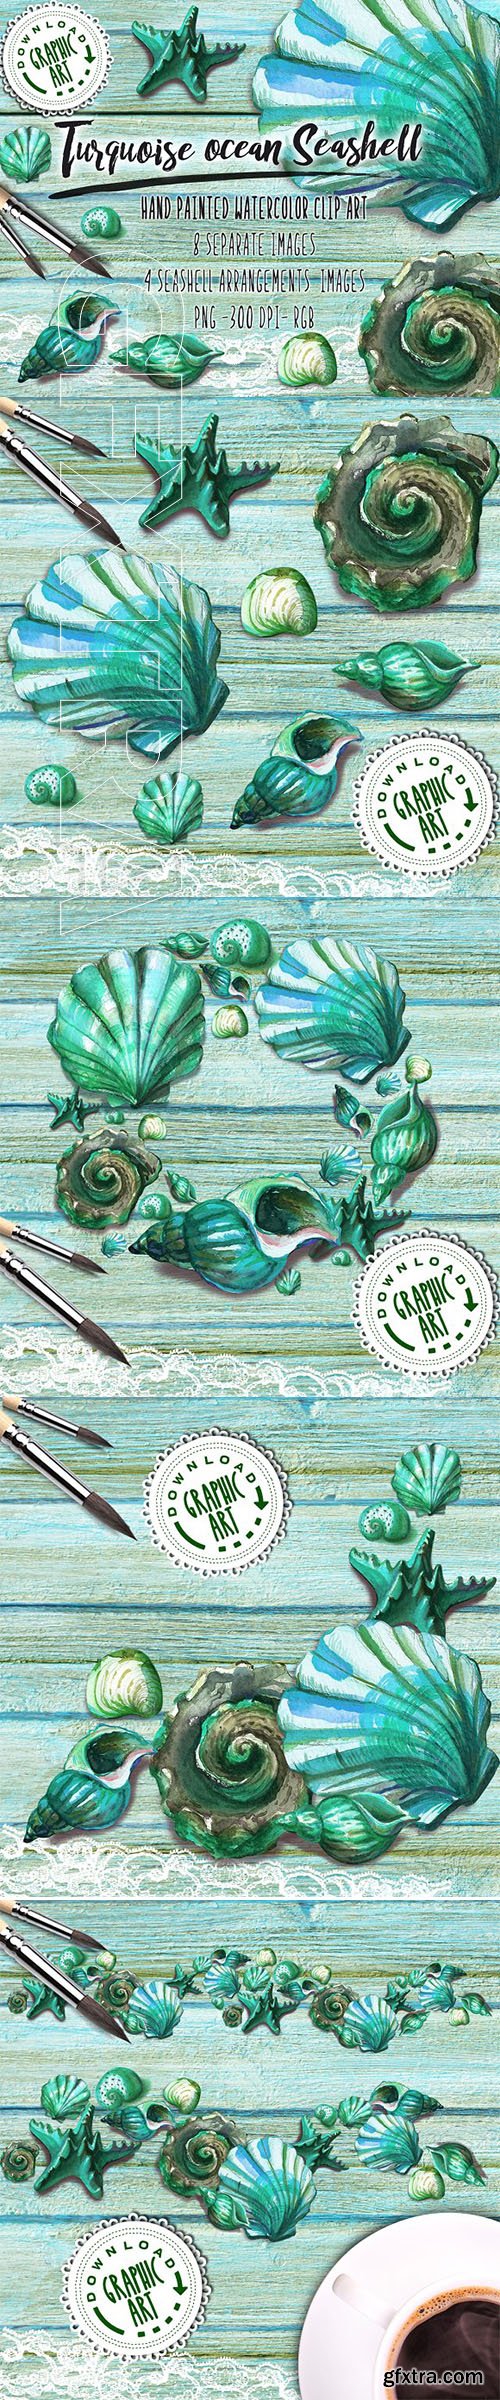 CreativeMarket - Watercolor clipart Seashell wreath 2390589